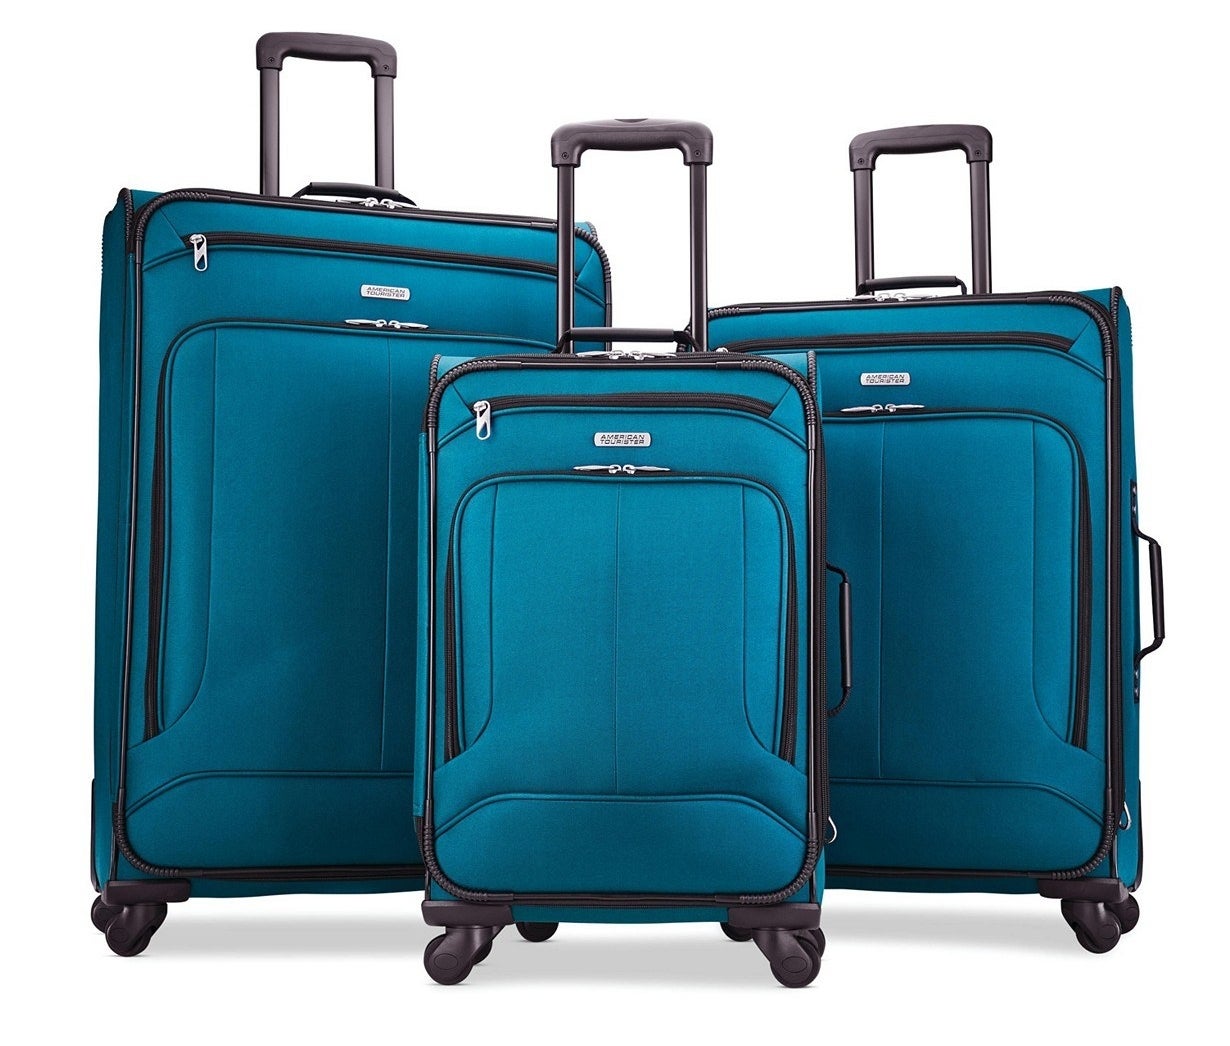 The wheeled blue soft luggage suitcases 